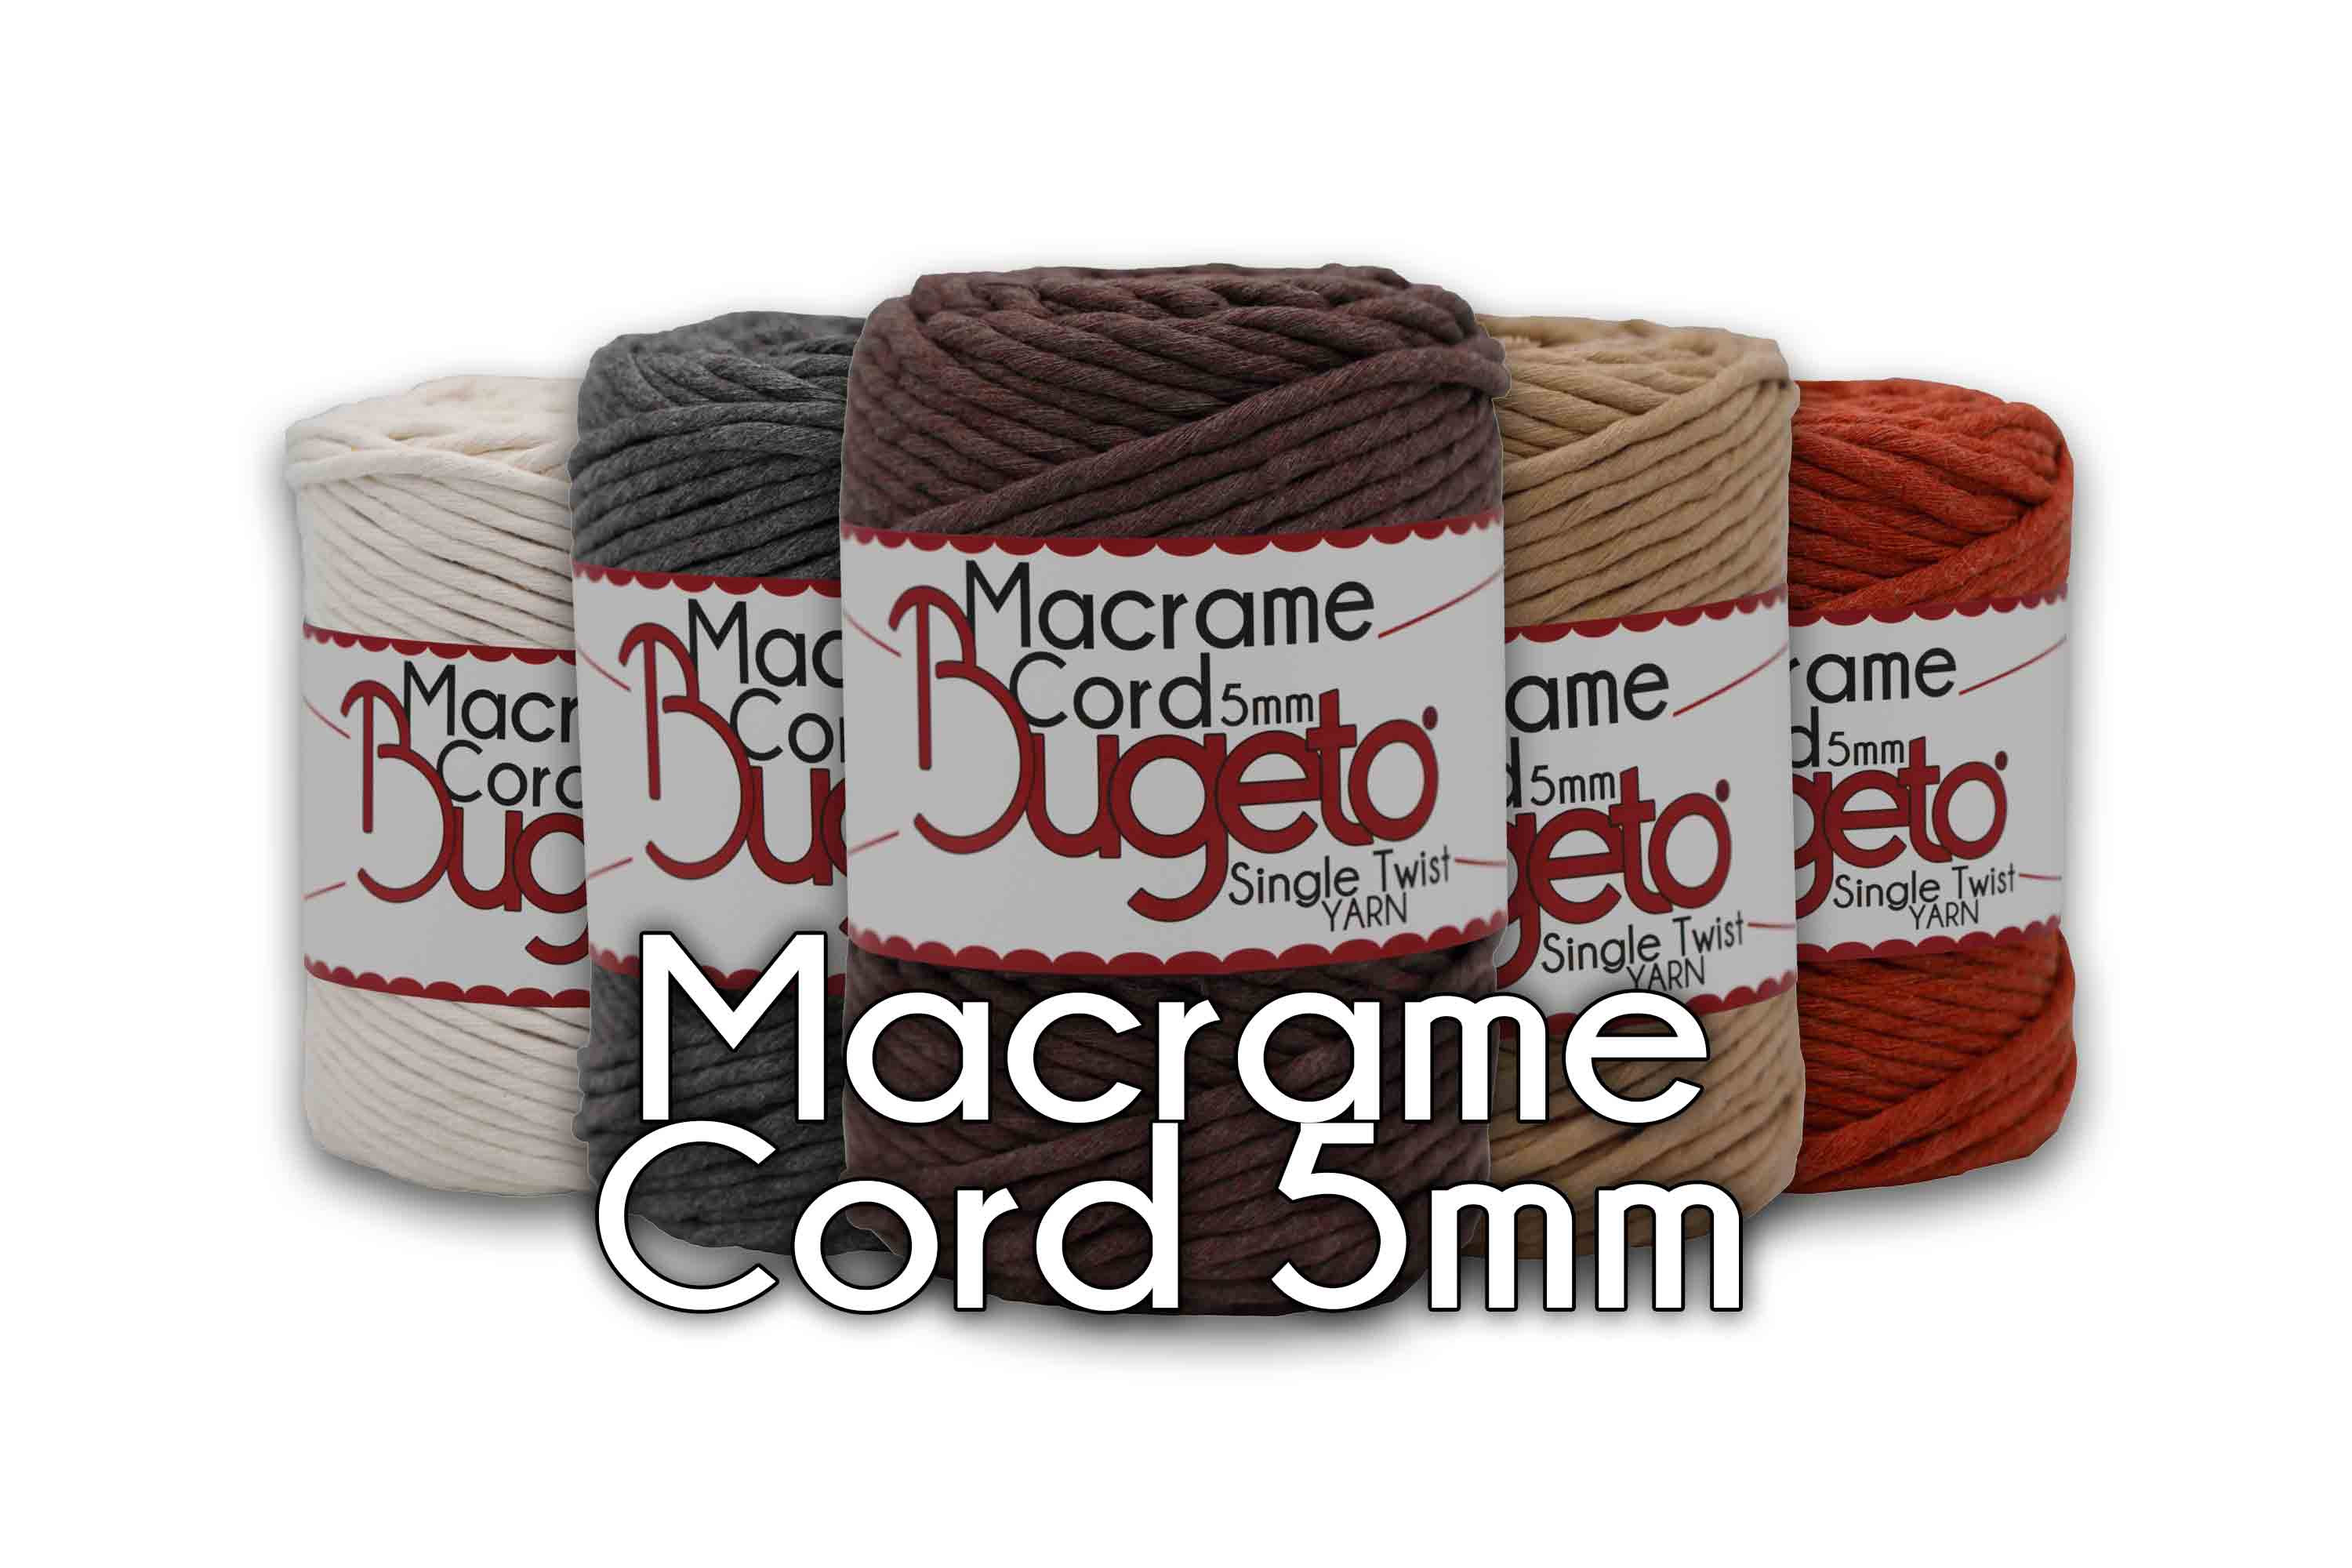 wall type macrame yarns macrame cord yarns 5mm wall type macrame yarn bugeto yarn 